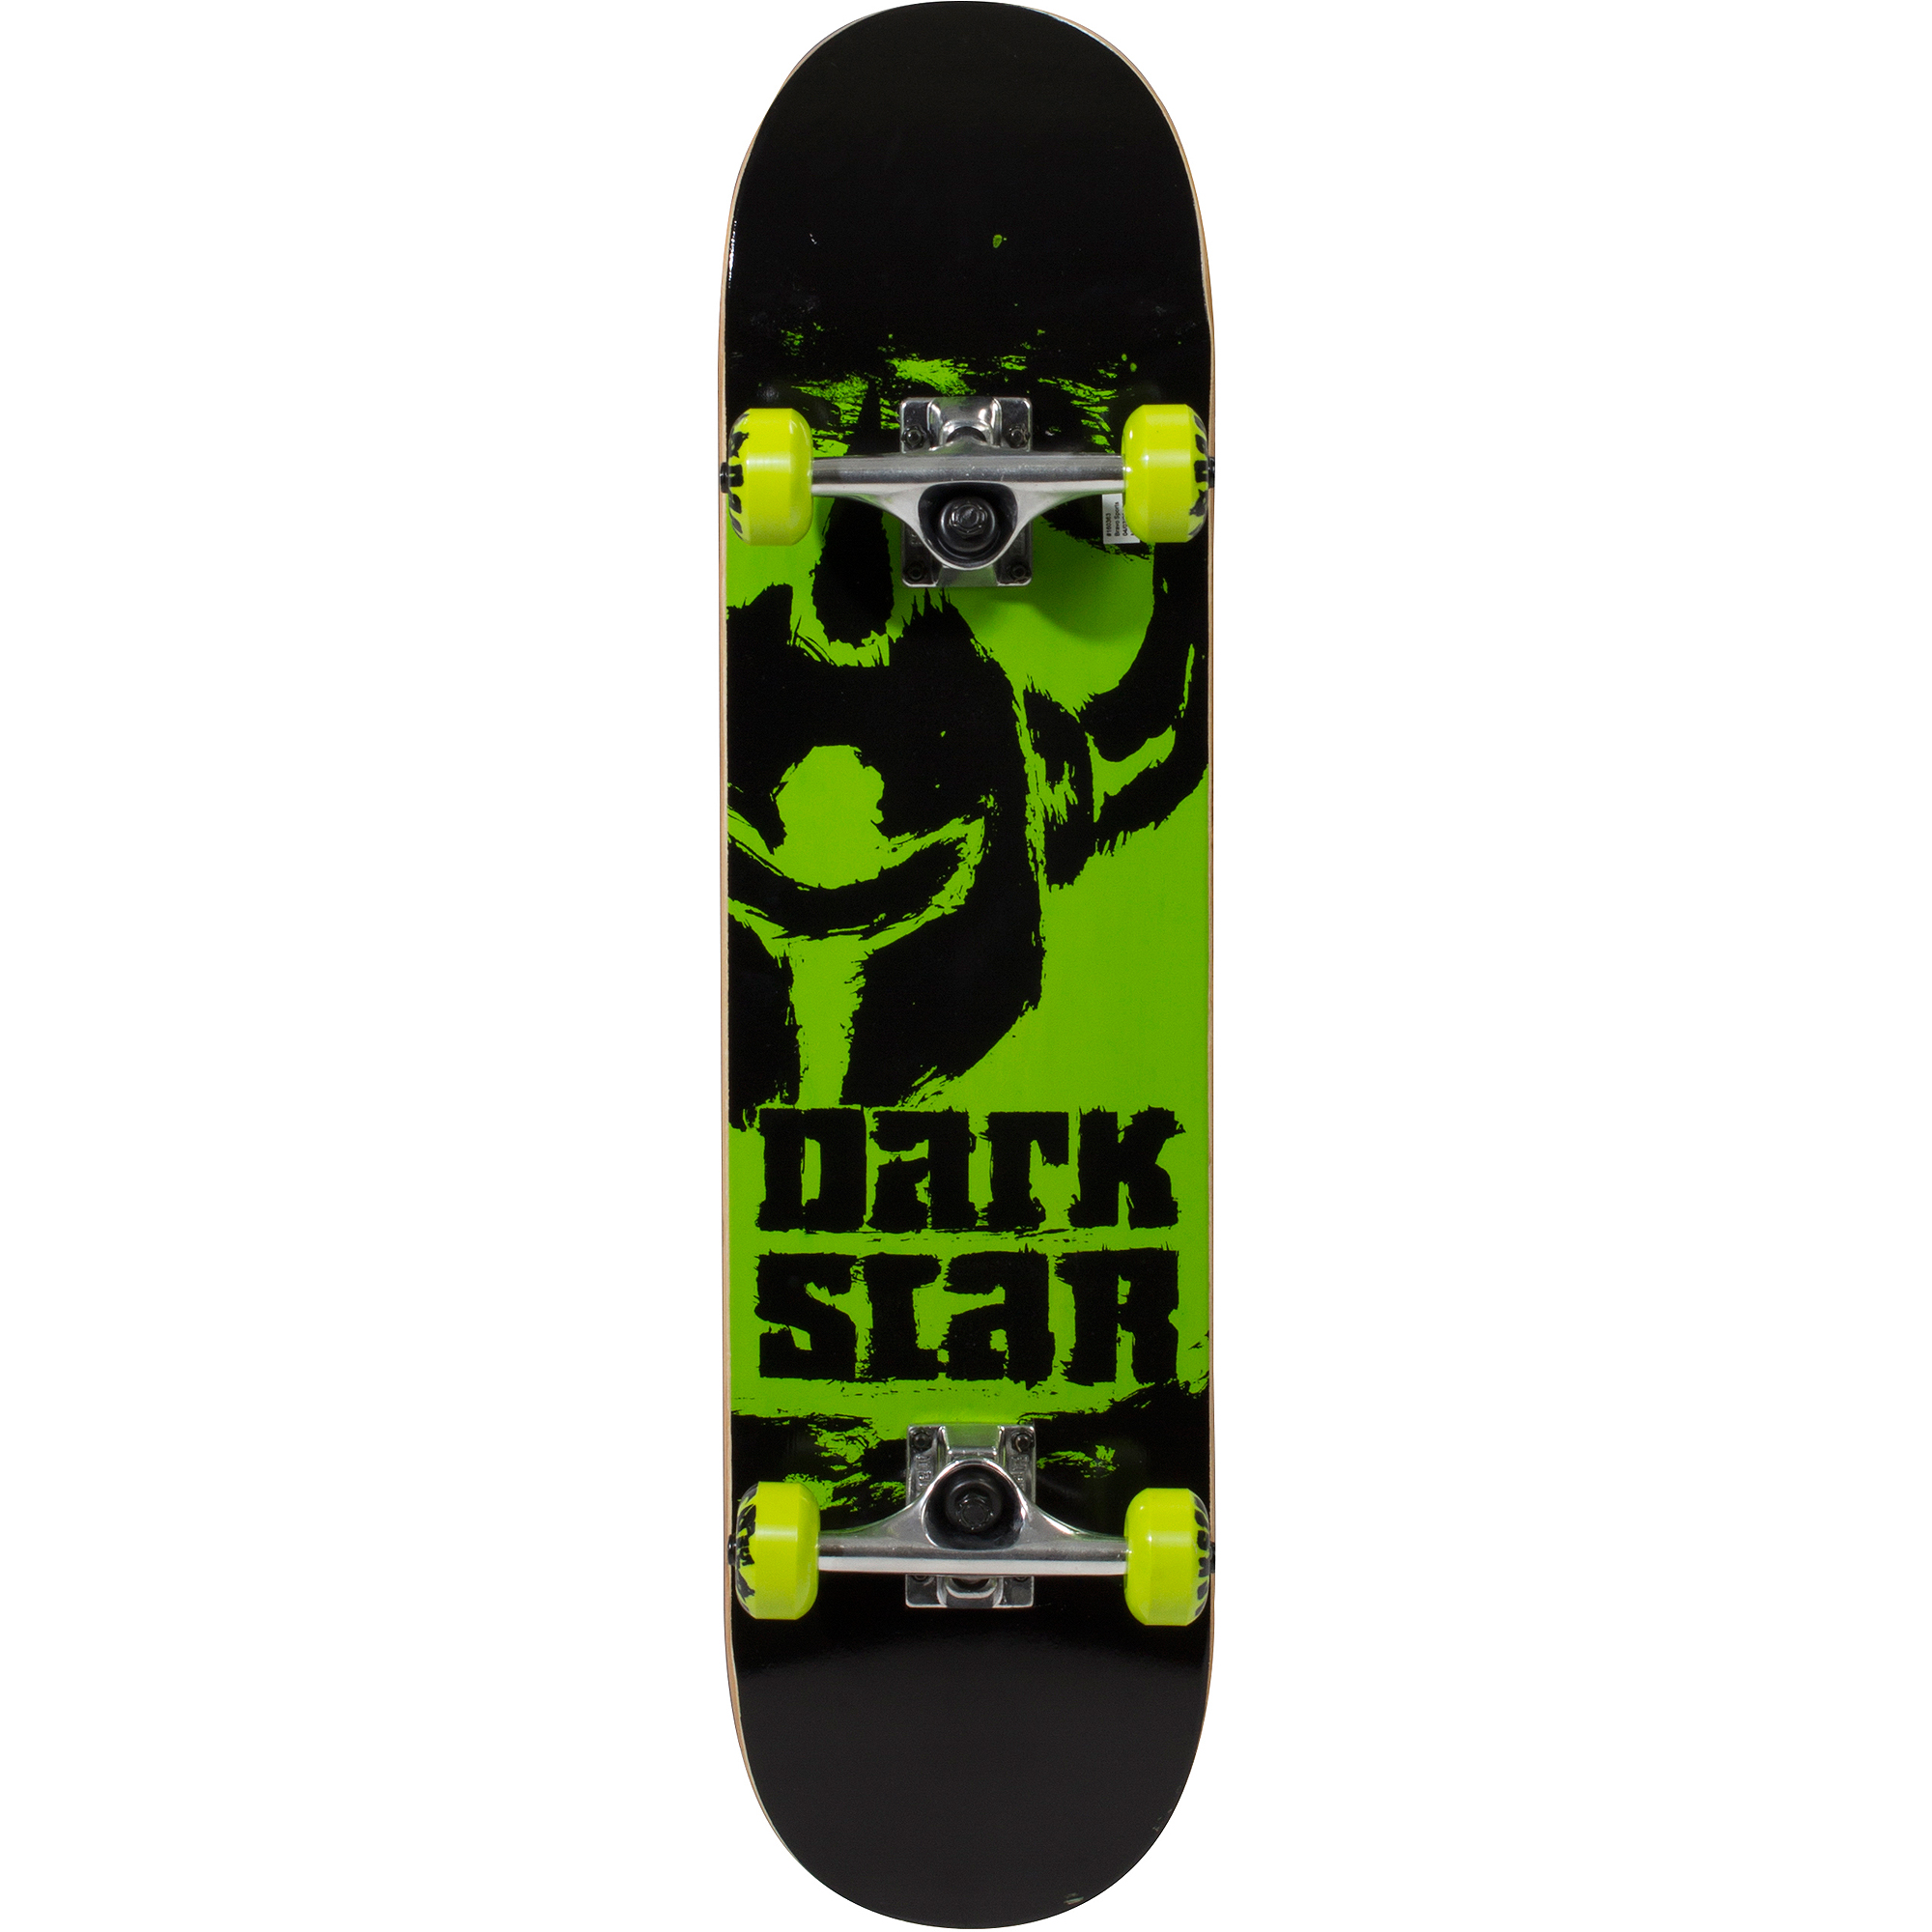 Darkstar DS40 Skateboard - image 1 of 2